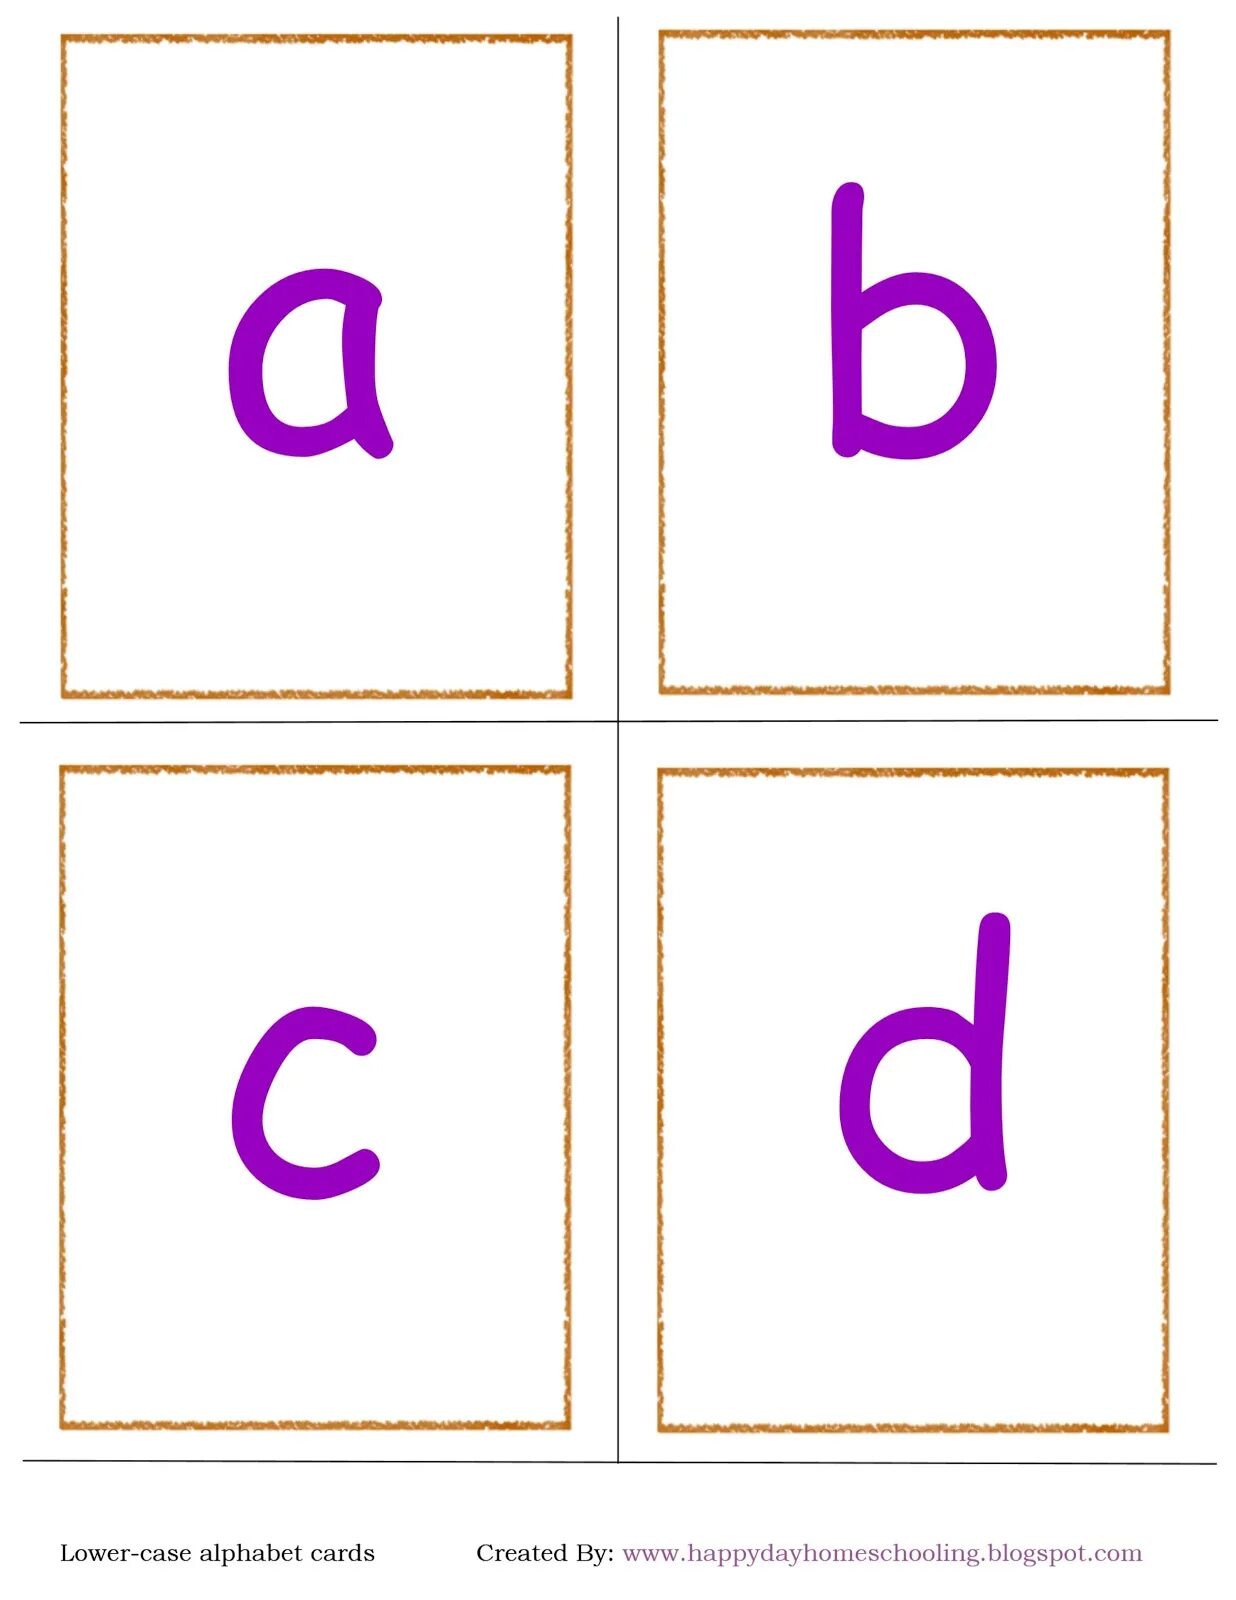 Printable cards. Флешкарты алфавит английский. Alphabet Cards lowercase. English Alphabet Cards for Kids. A lowercase карты.